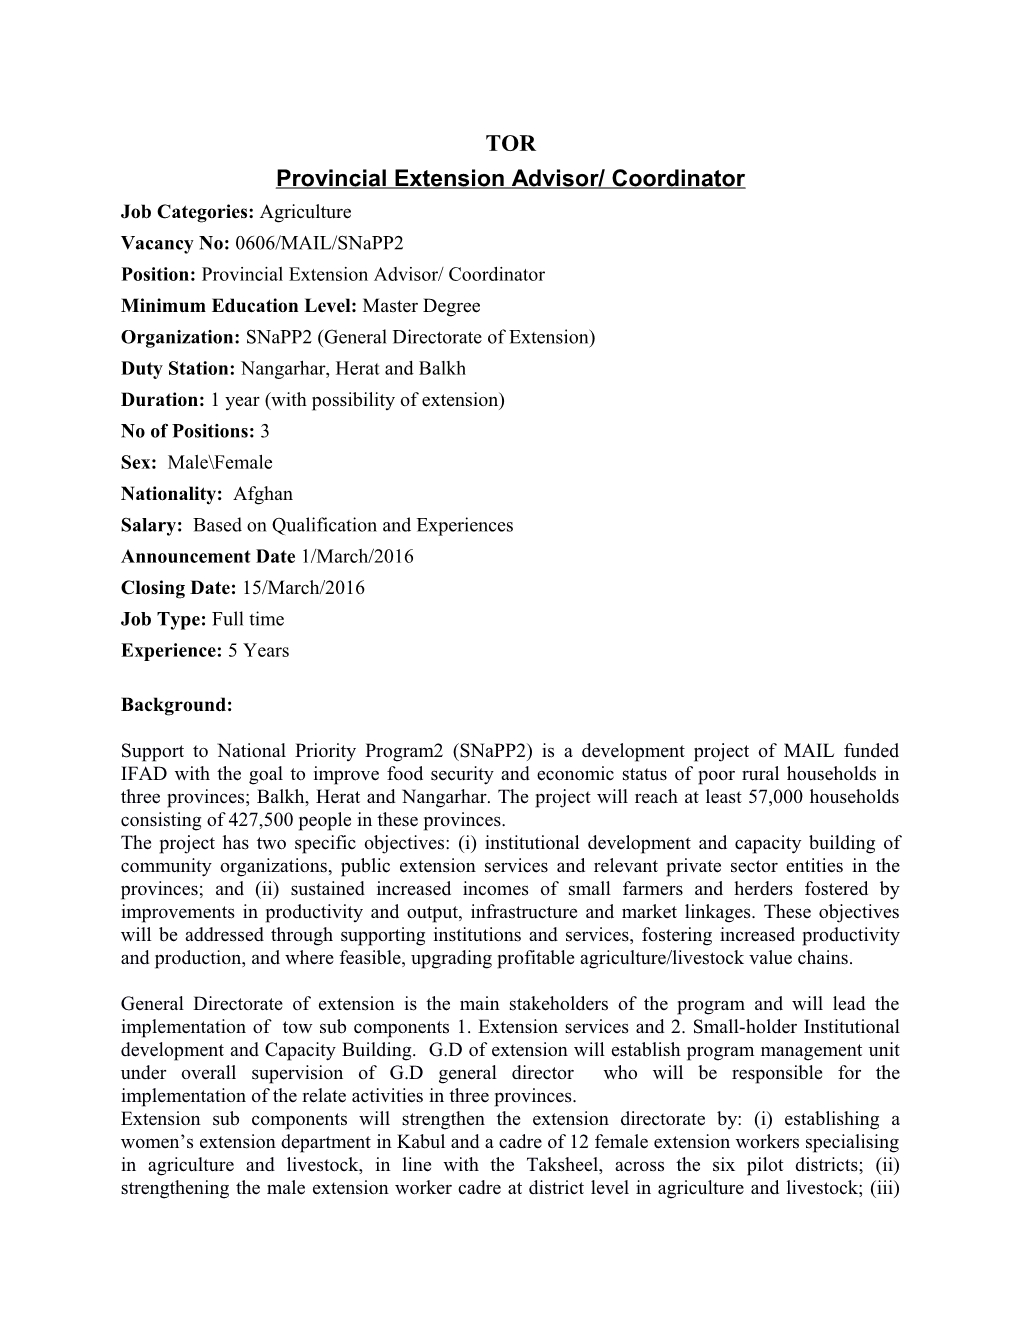 Provincial Extension Advisor/ Coordinator